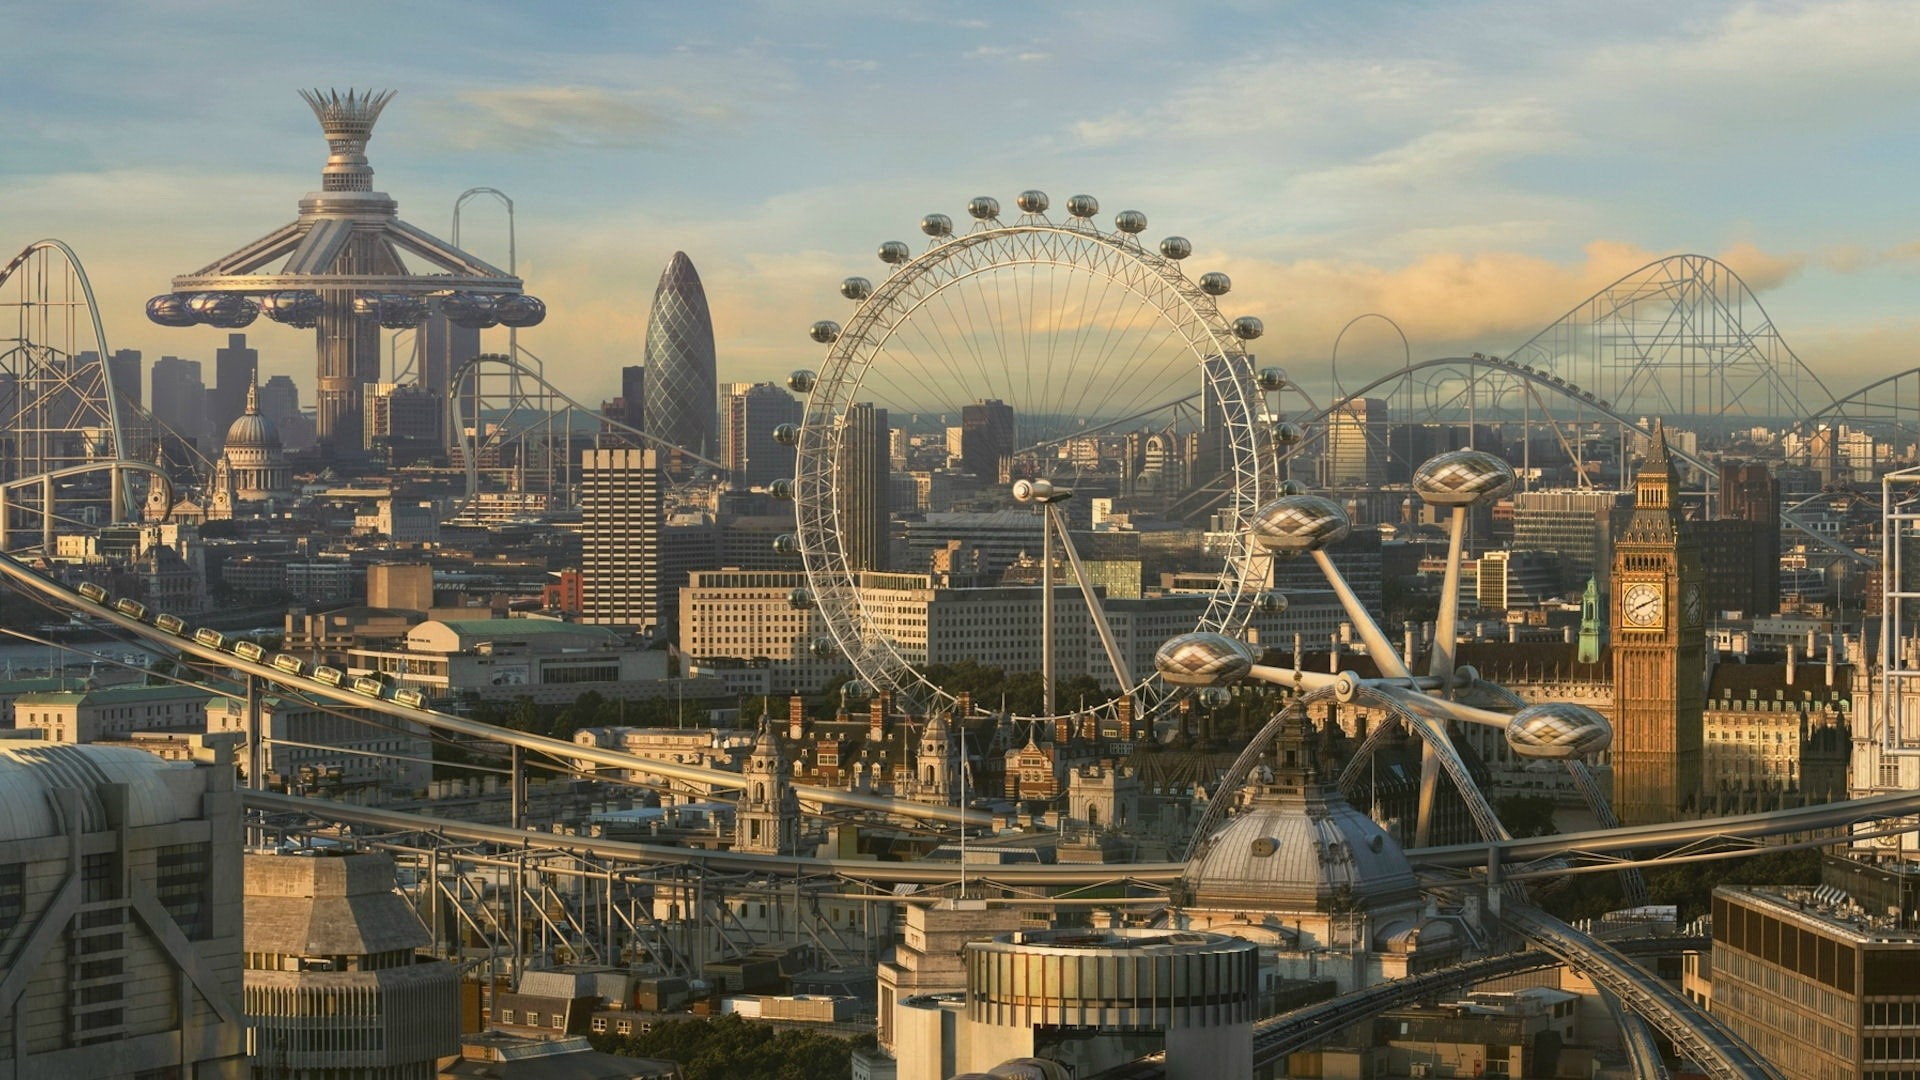 theme parks, London, ferris wheel, CGI, digital art, cityscape